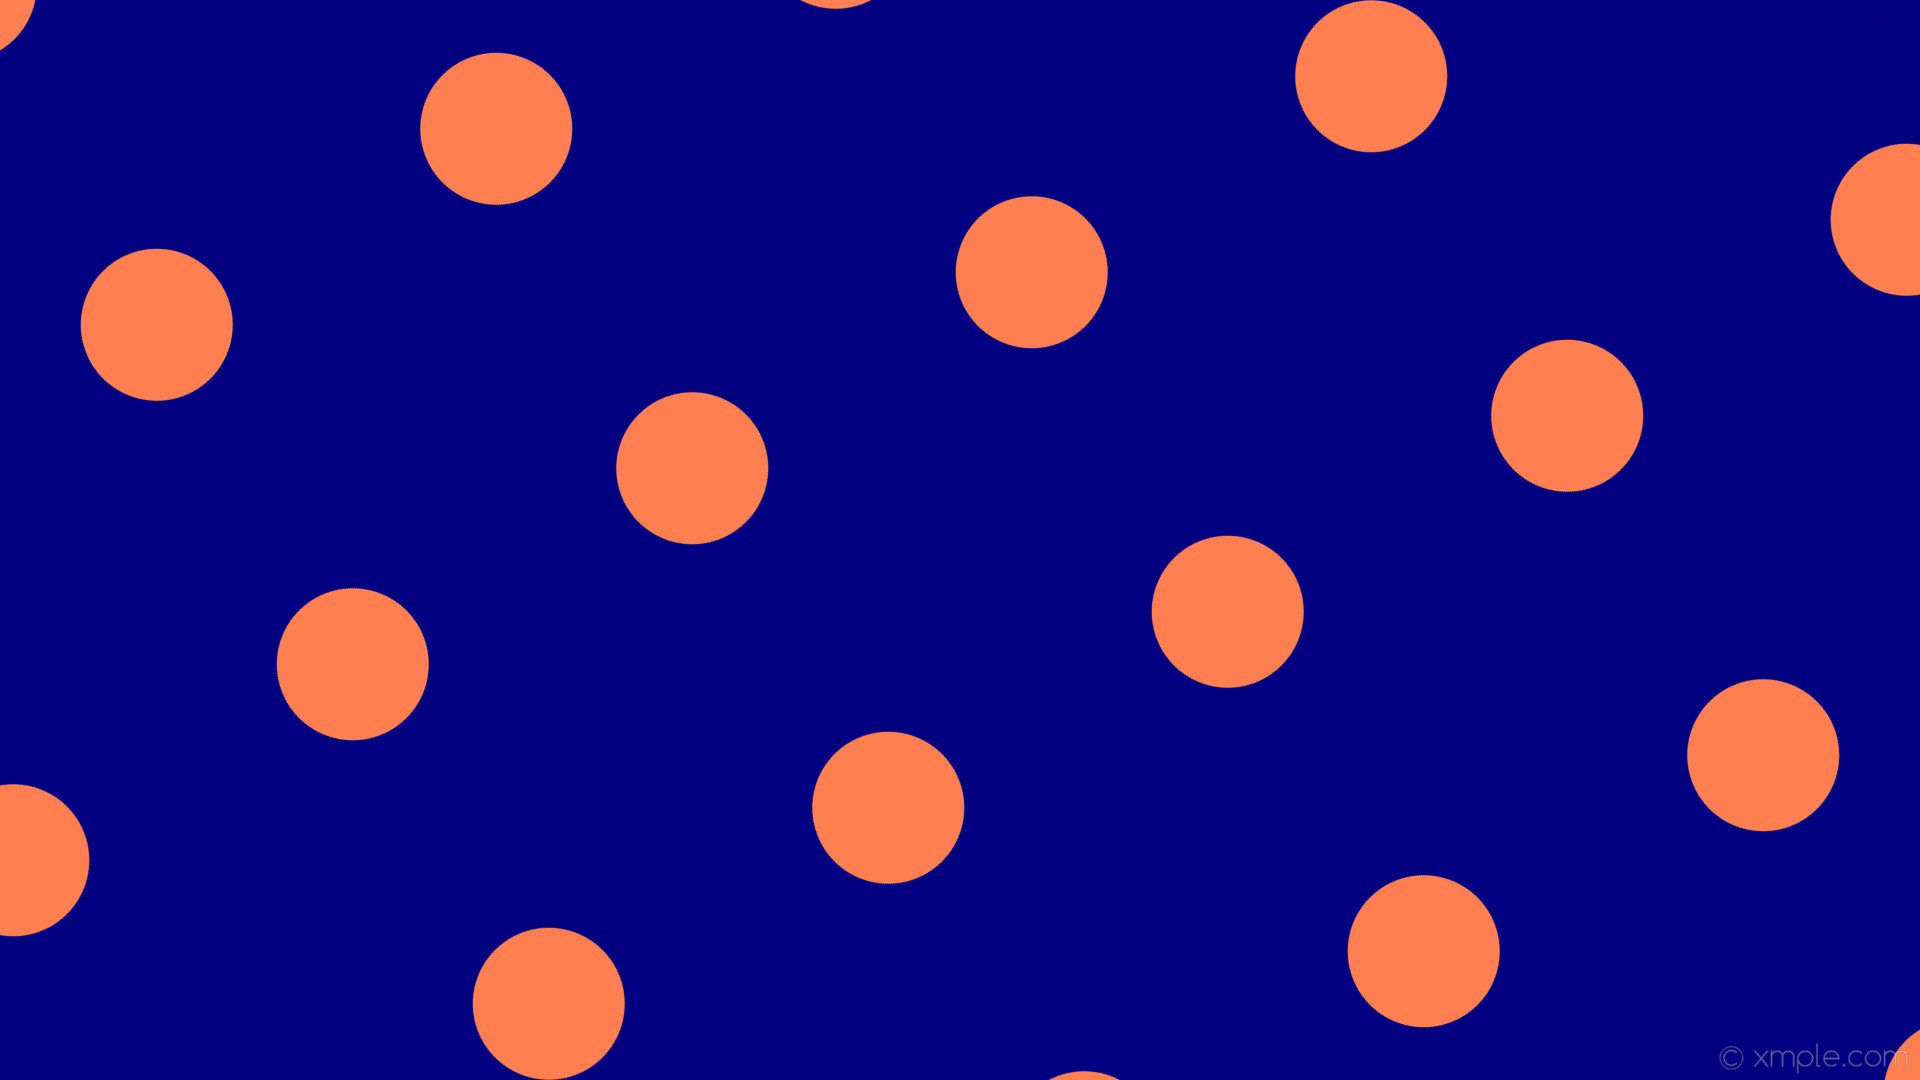 1920x1080 wallpaper orange spots blue polka dots navy coral #000080 #ff7f50 120Â°  152px 392px